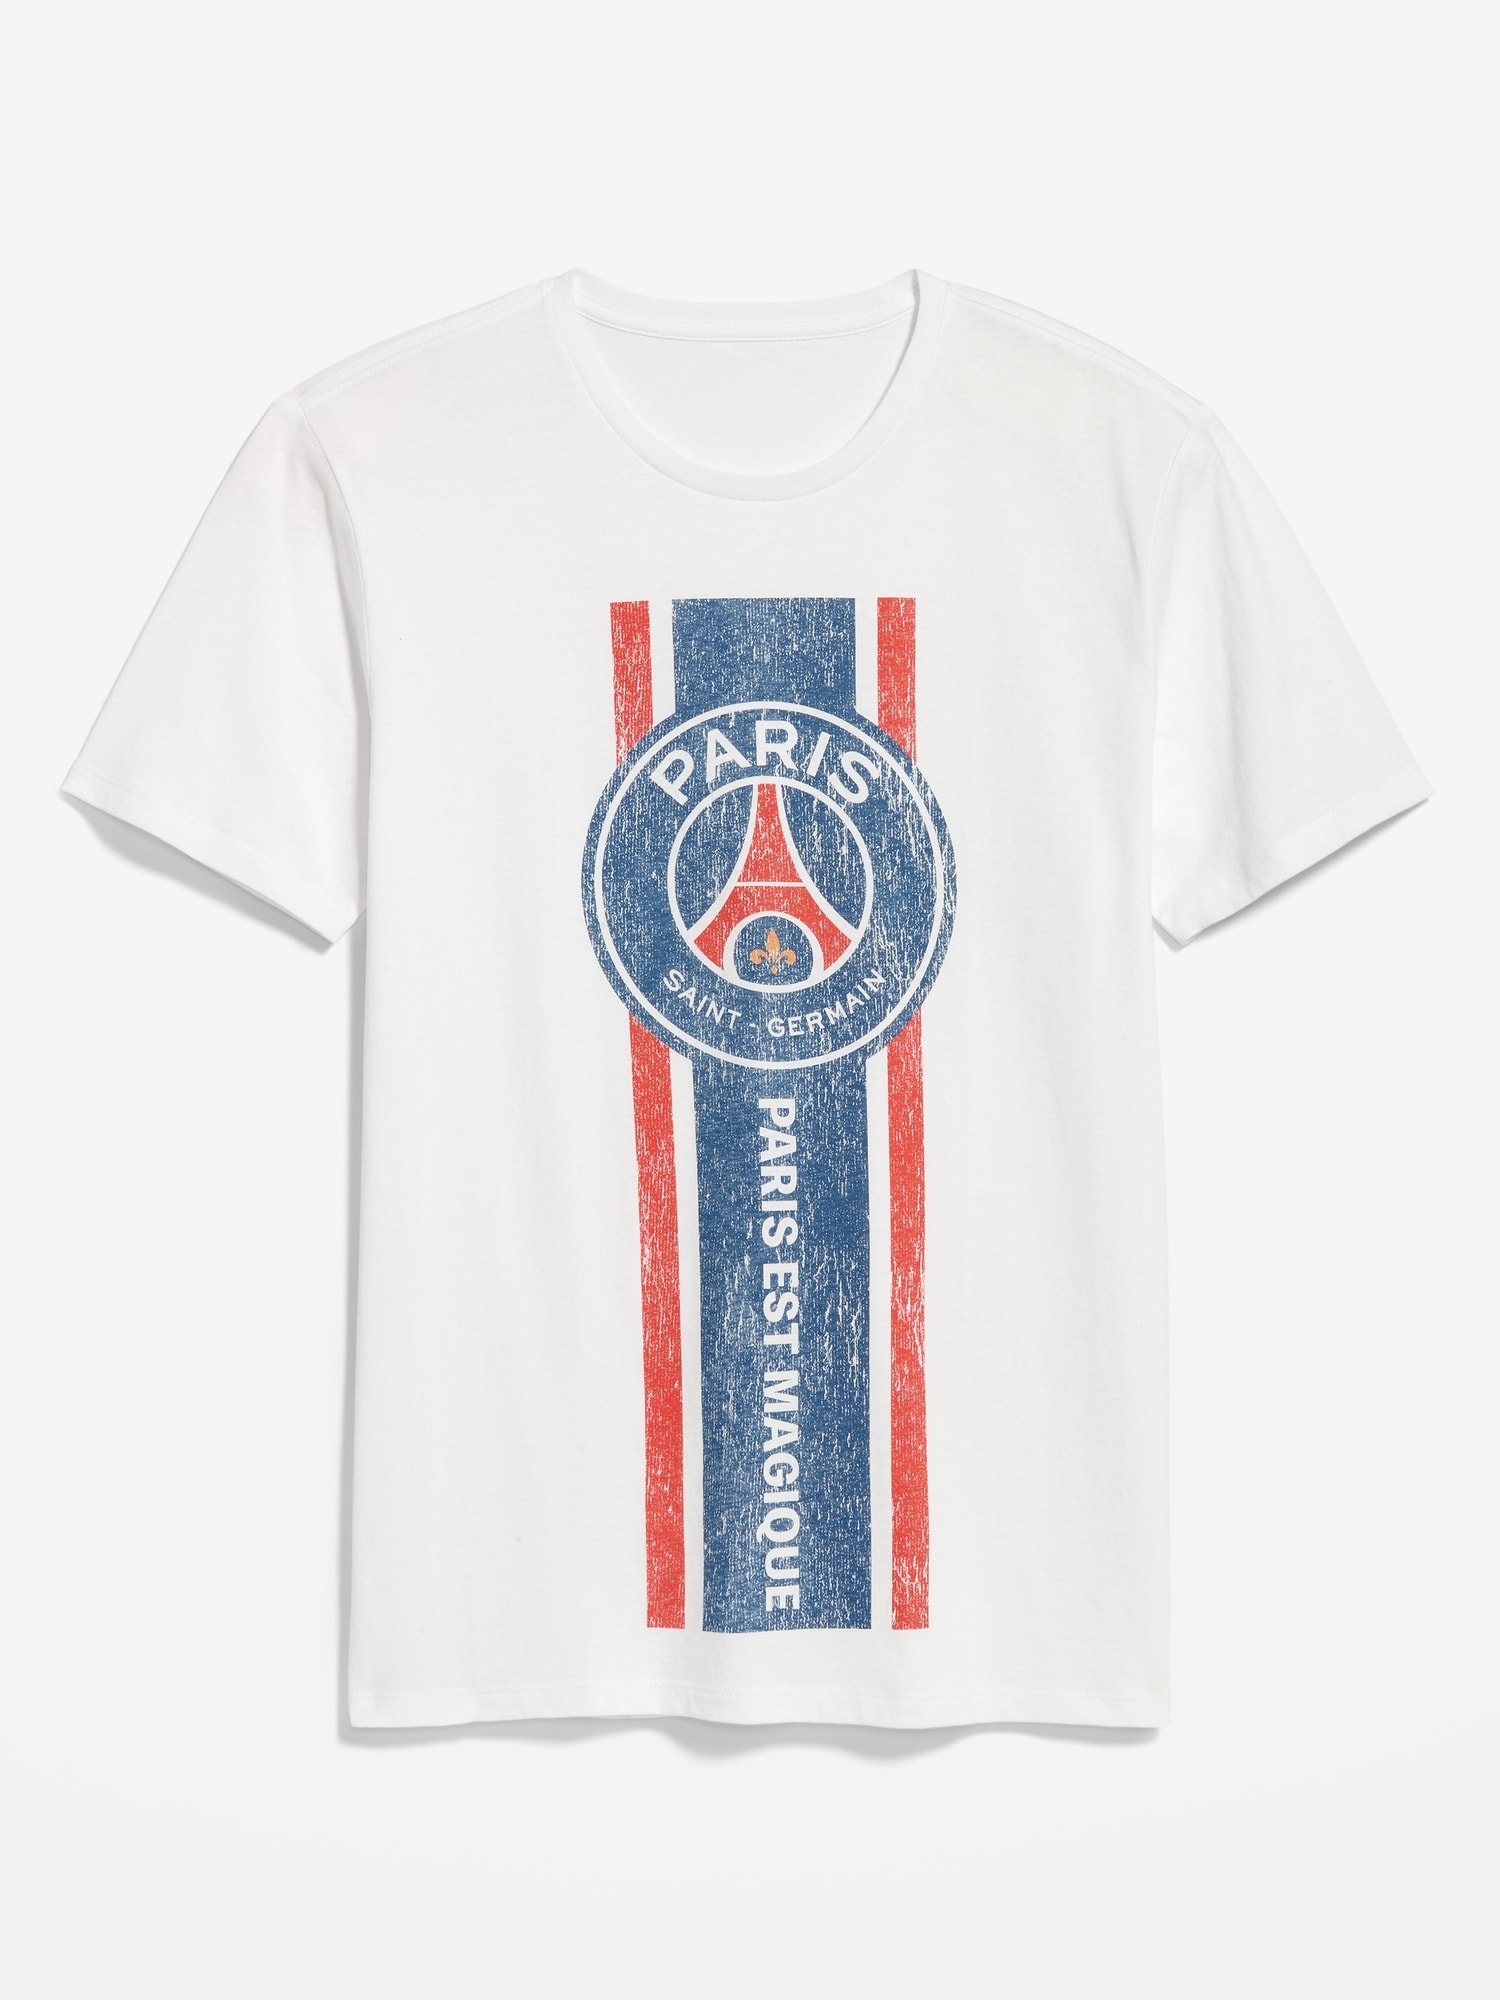 Paris Saint-Germain© Gender-Neutral T-Shirt for Adults